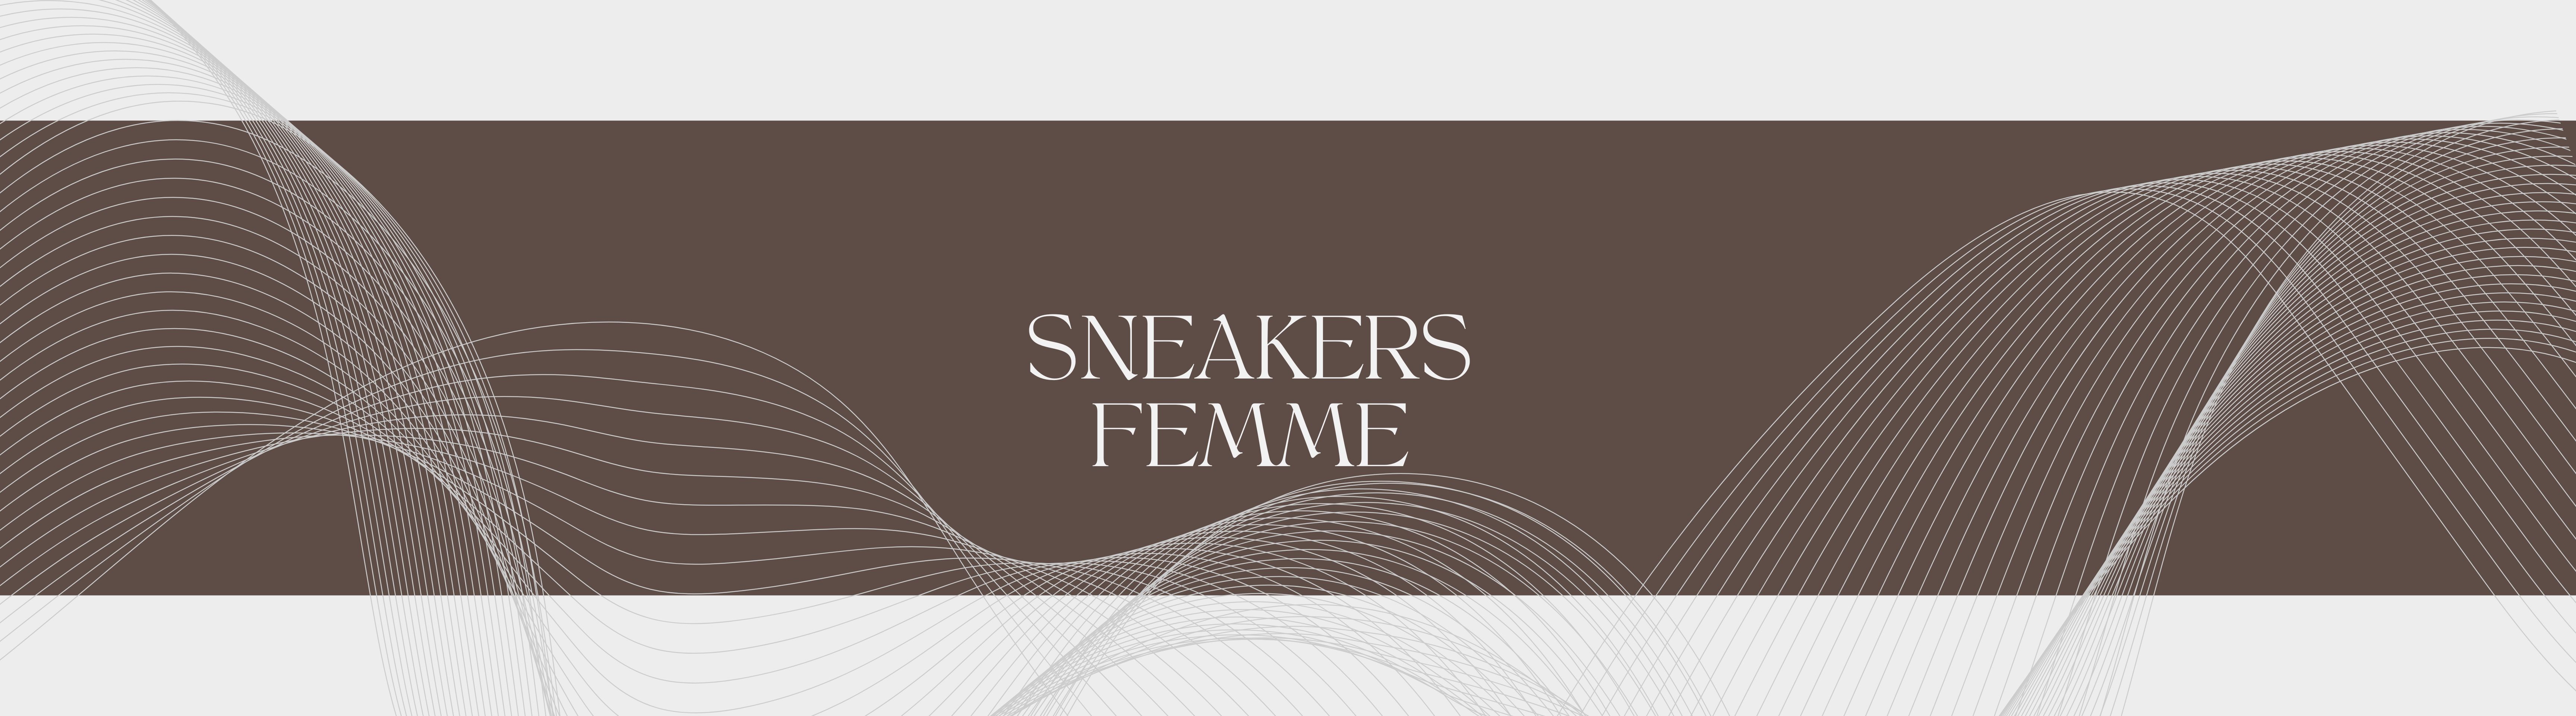 Sneakers pour femme